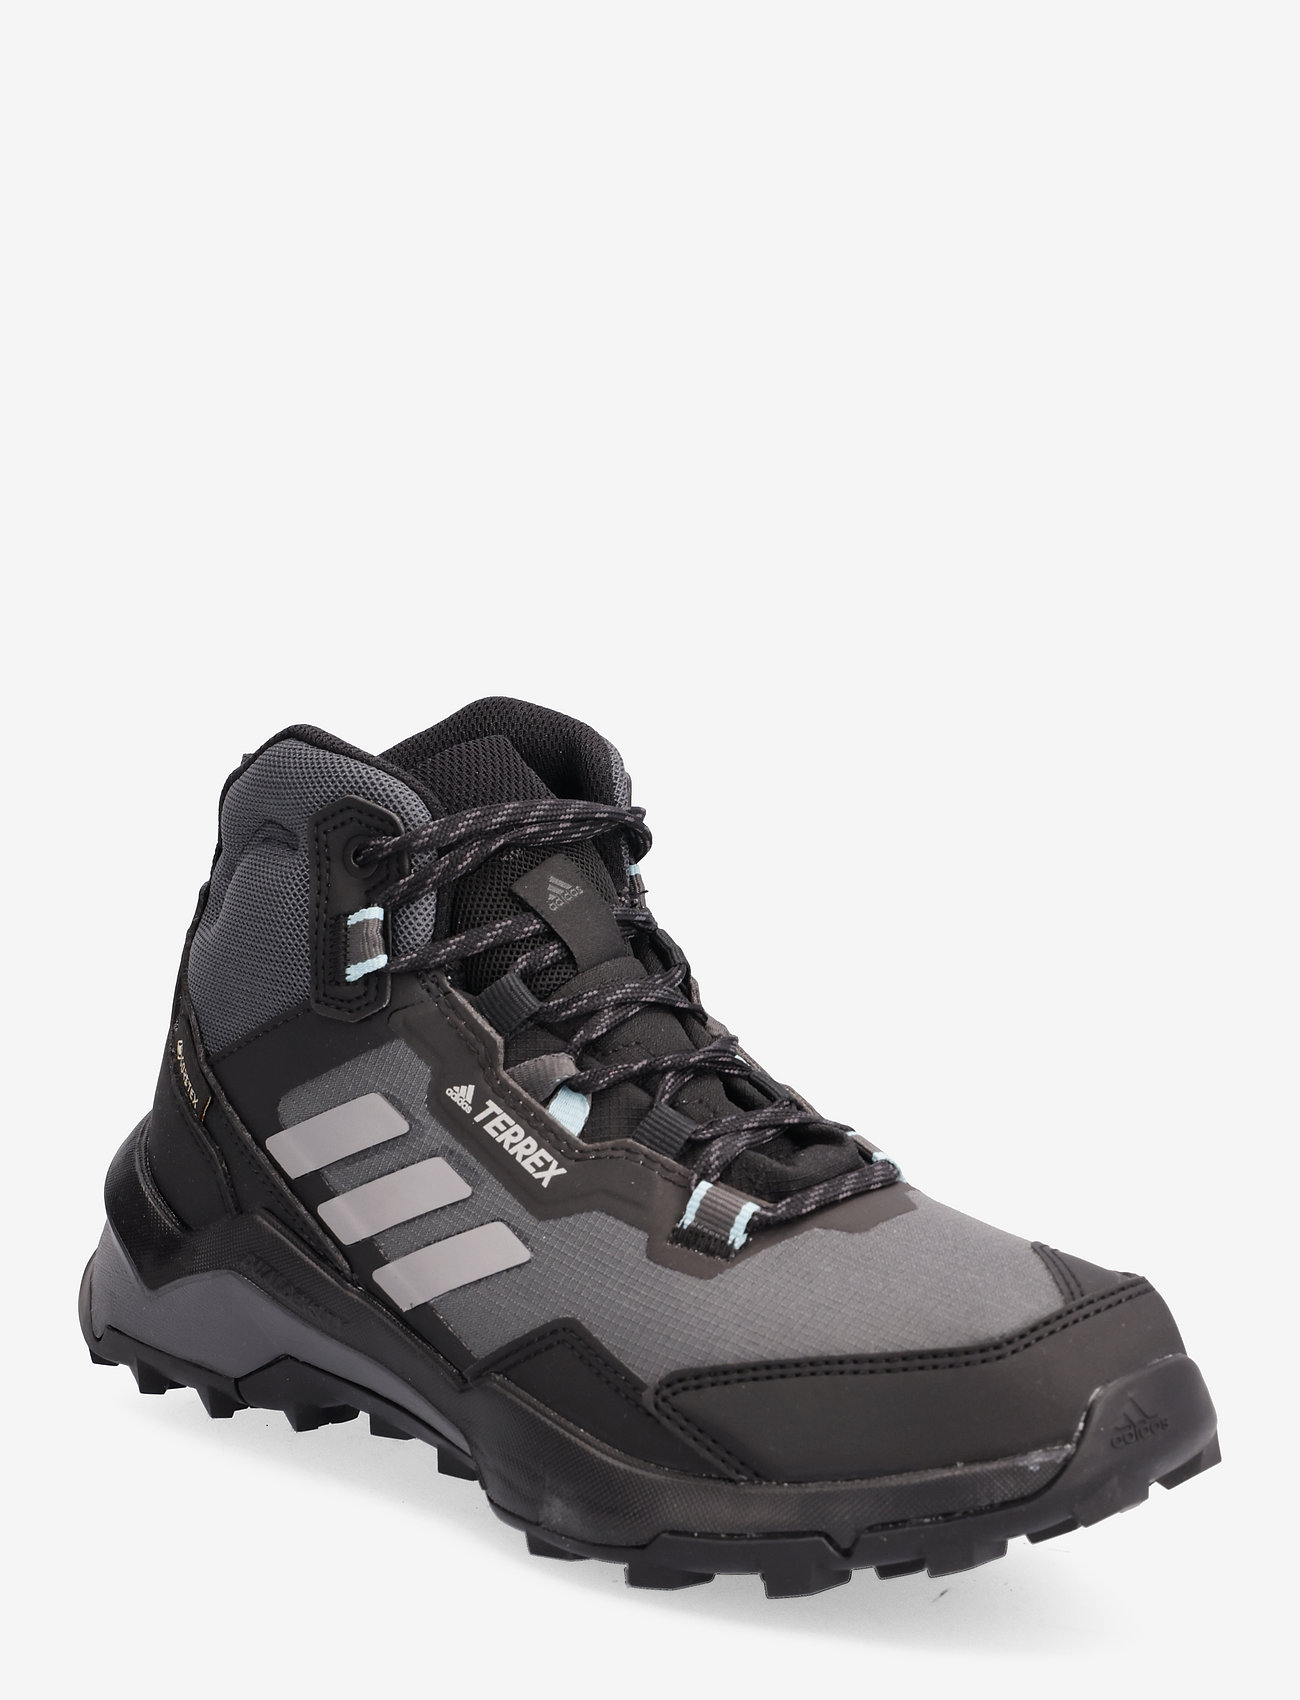 adidas Performance adidas terrex gtx mid Terrex Ax4 Mid Gore-tex Hiking Shoes - Hiking